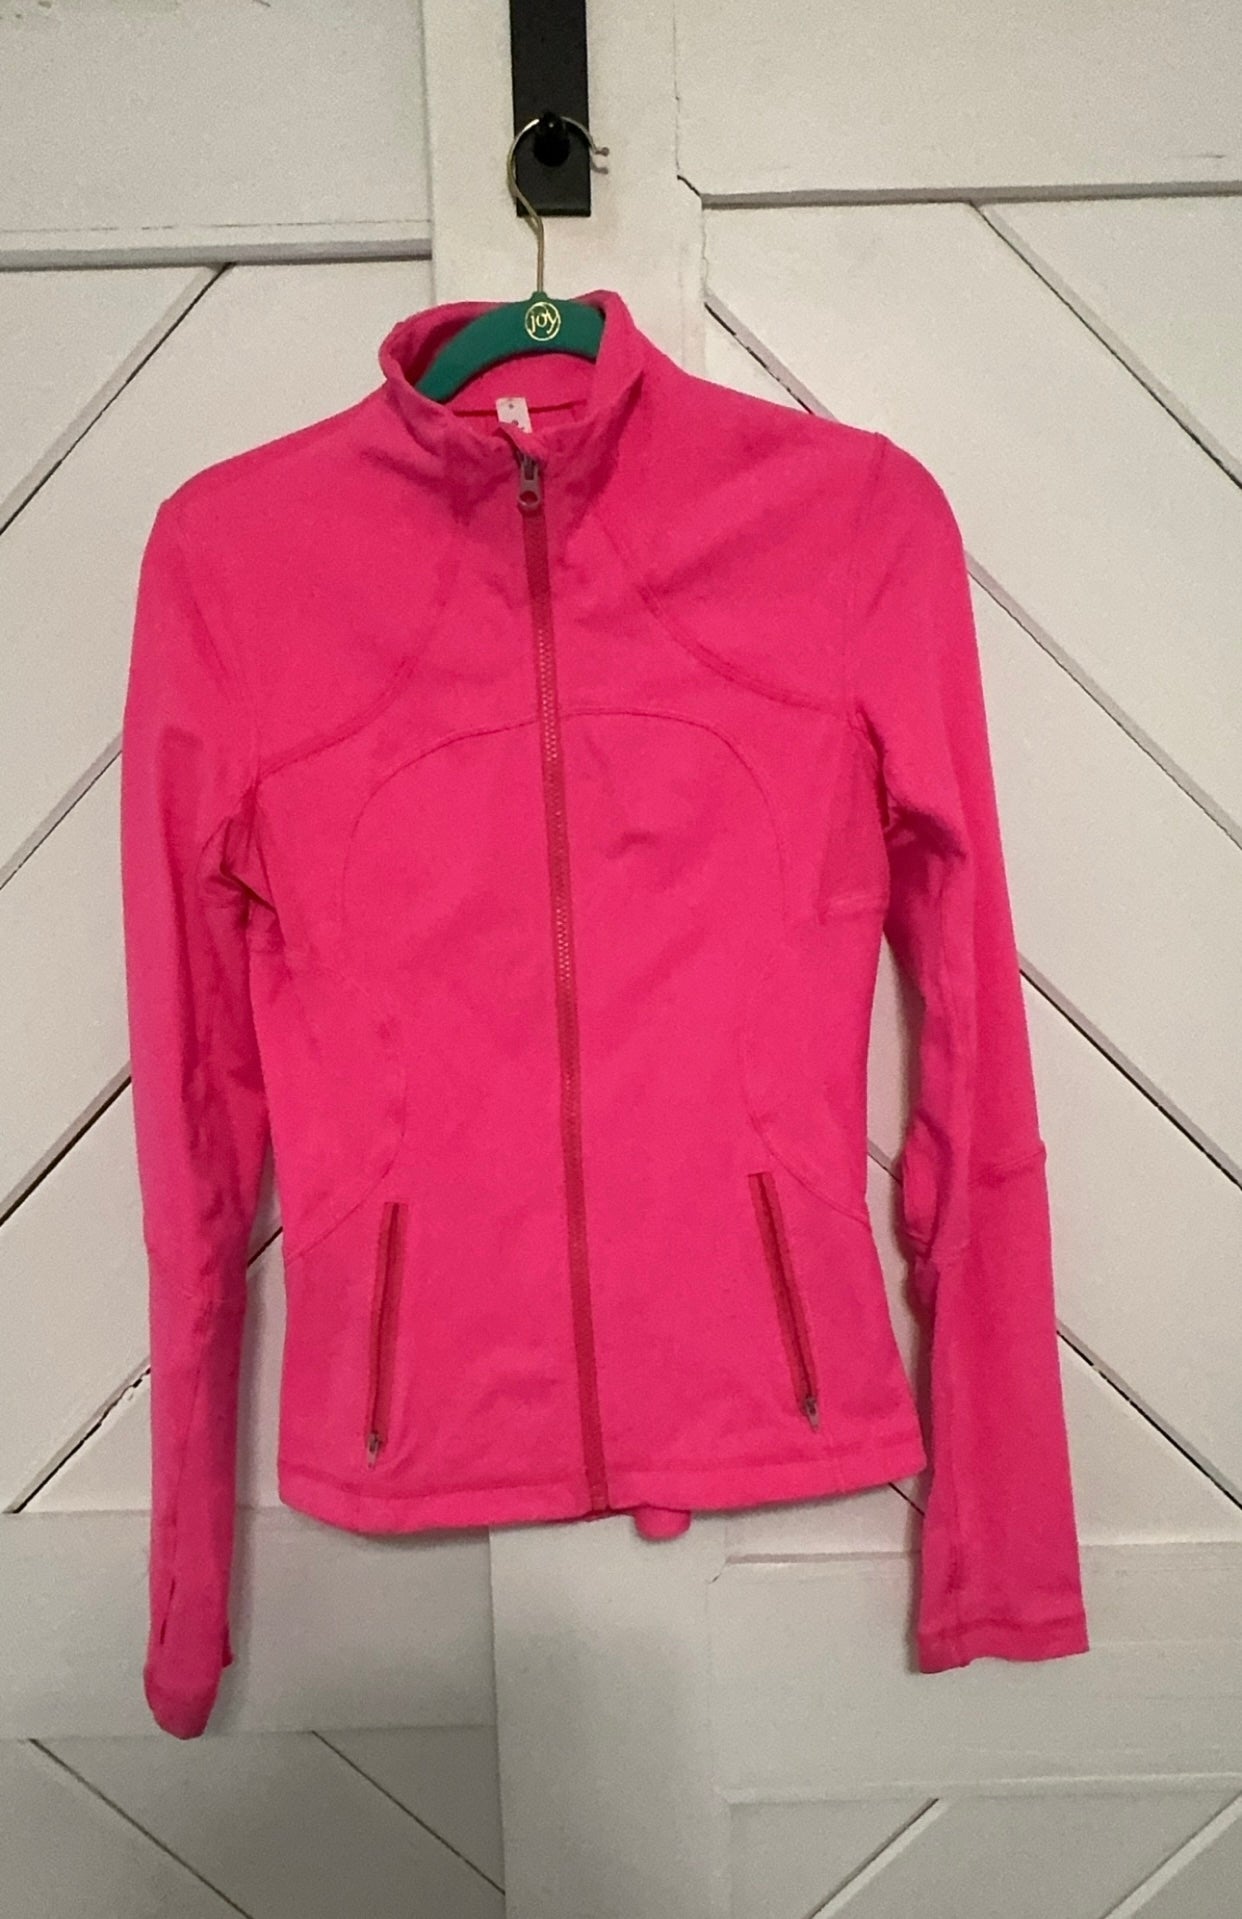 Lululemon Define Jacket - Pink - Size 6 (Small / Medium)